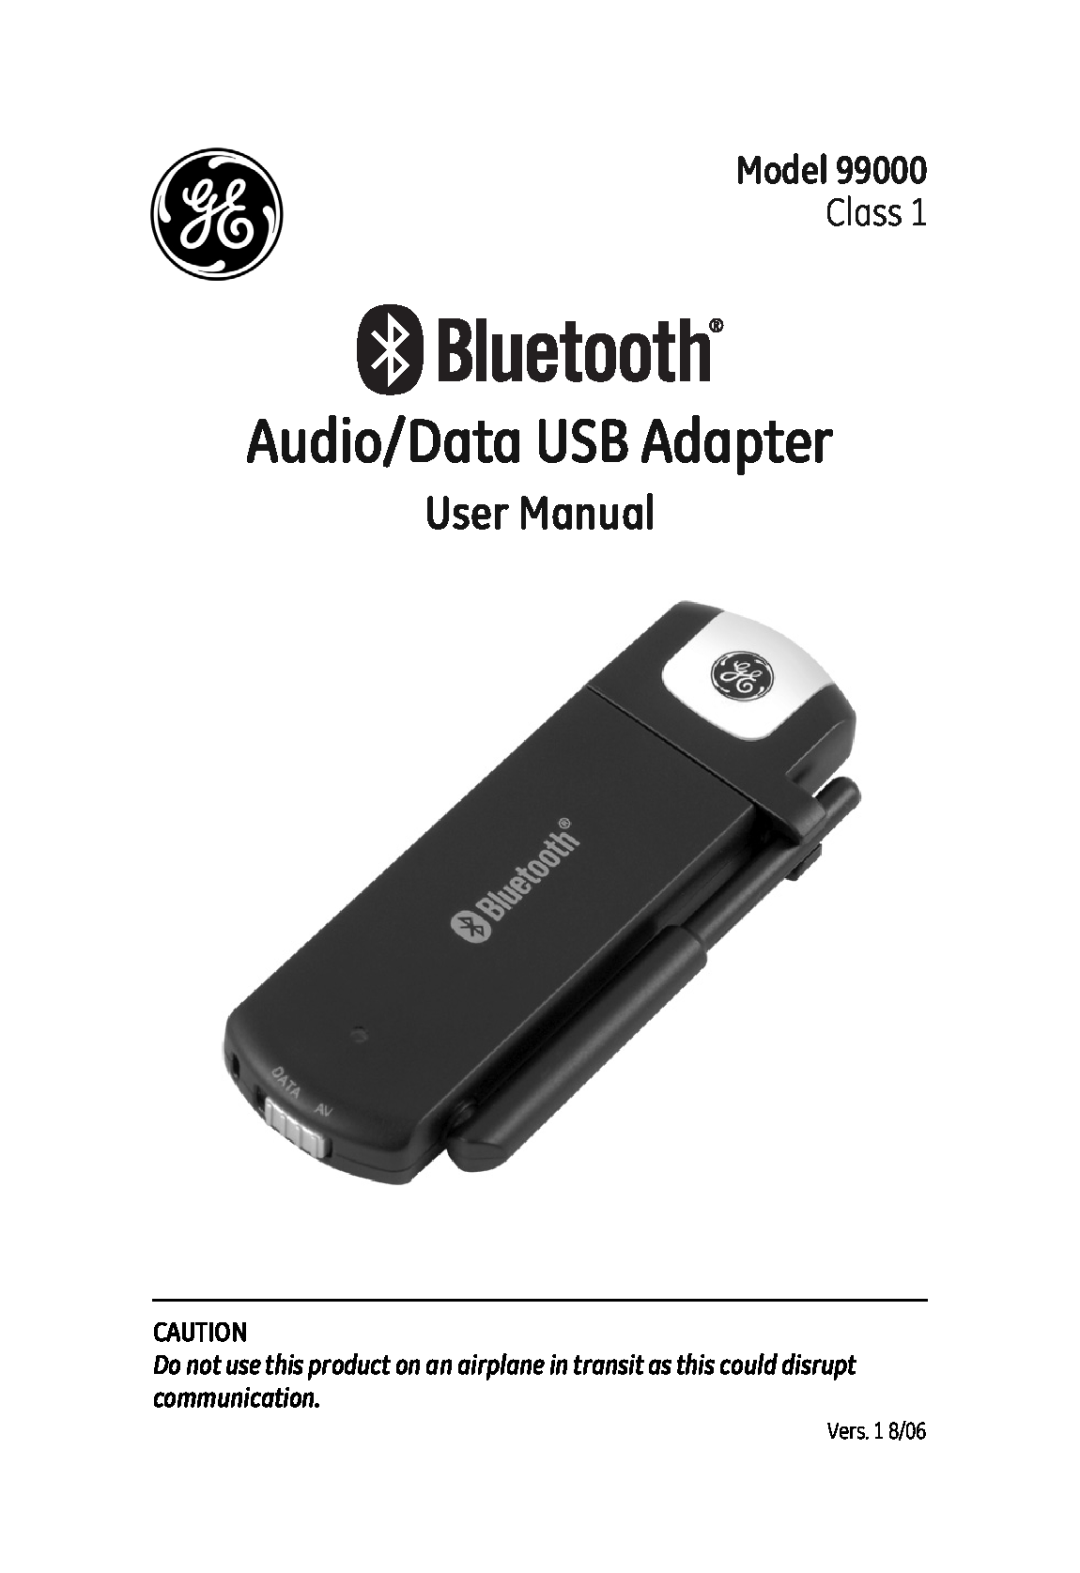 Jasco 99000 user manual Audio/Data USB Adapter, User Manual, Model, Class 